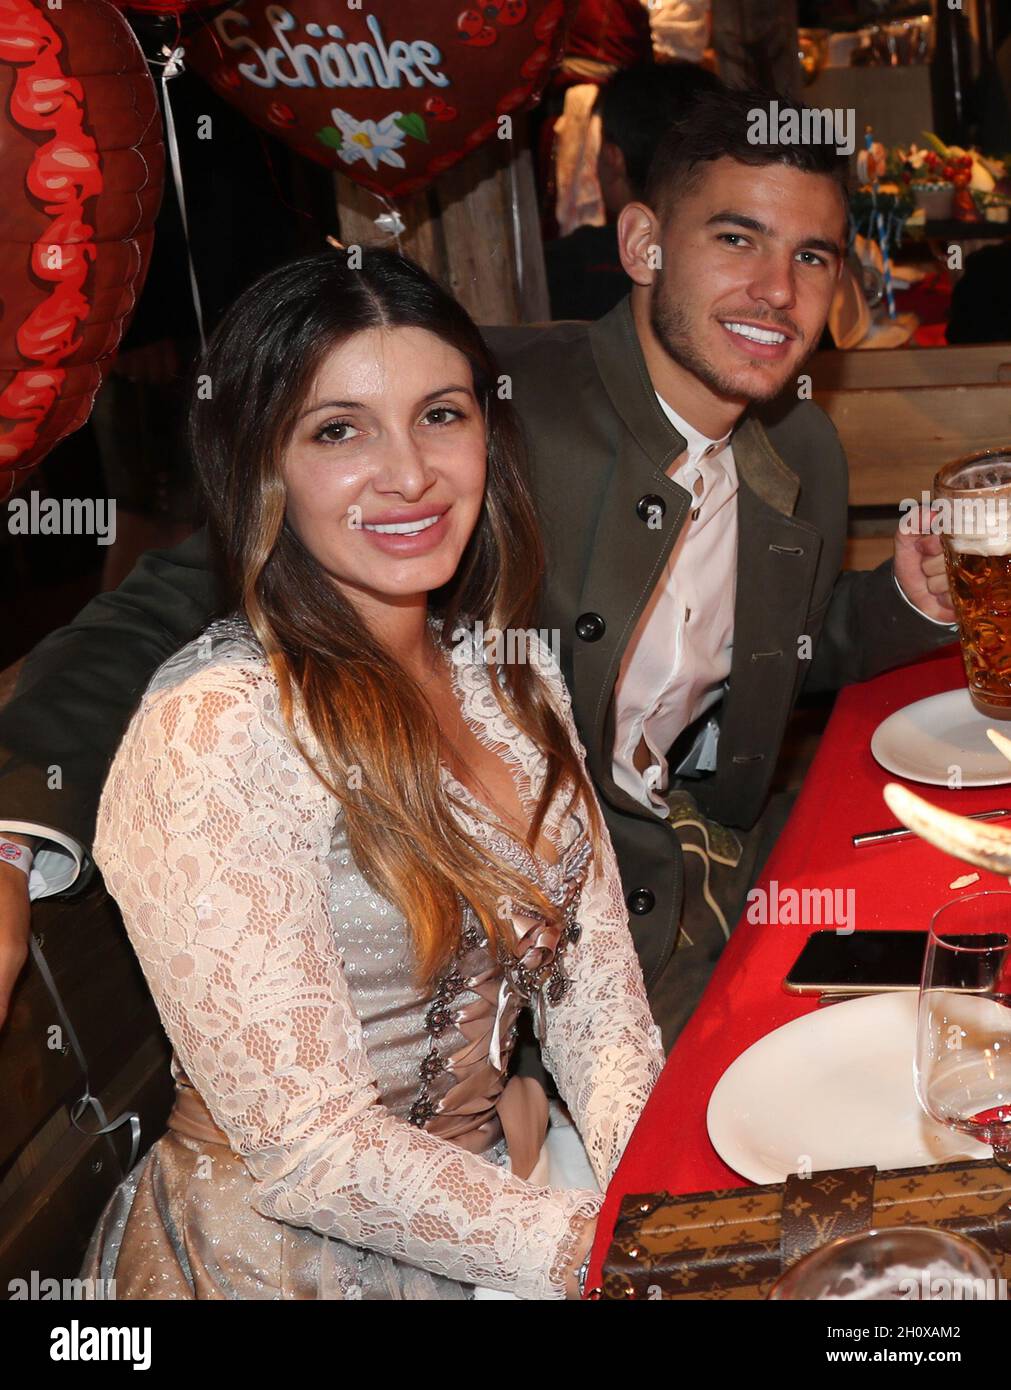 Lucas Hernandez with his wife Amelia Ossa Llorente Loremte FC Bayern Munich  Oktoberfest © diebilderwelt / Alamy Stock Stock Photo - Alamy